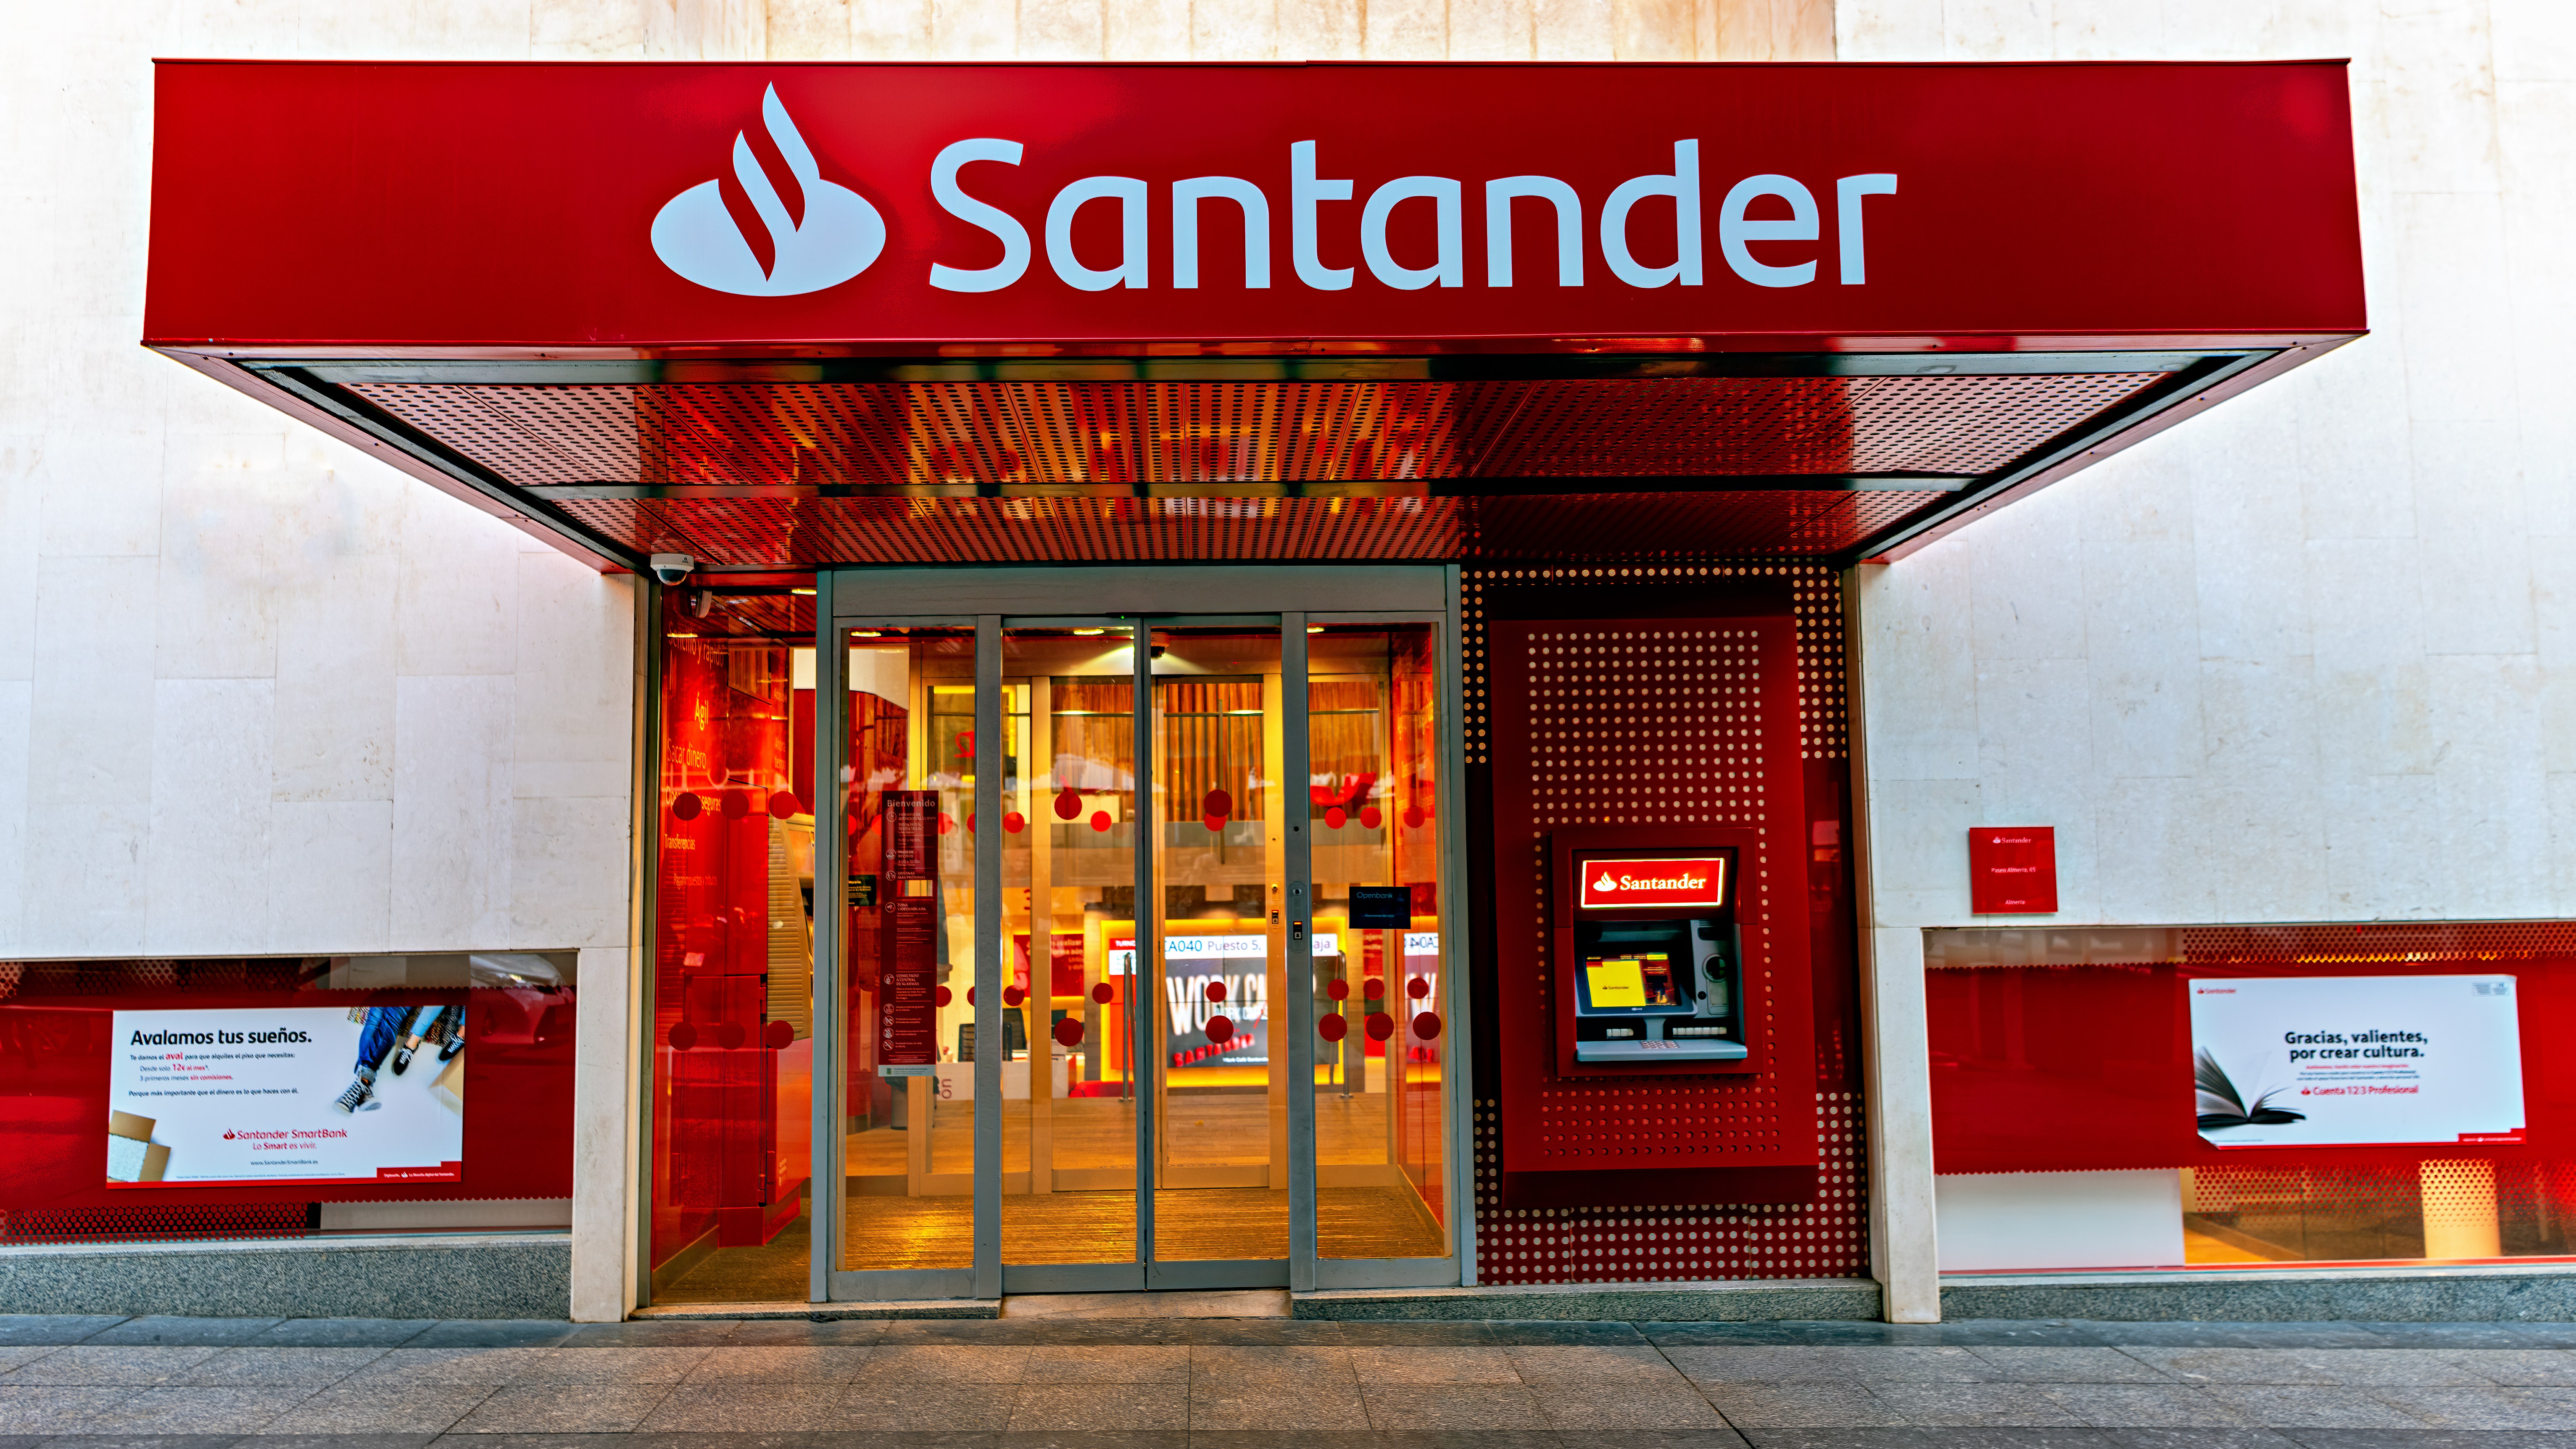 A Global Bank with US Impact - Santander US